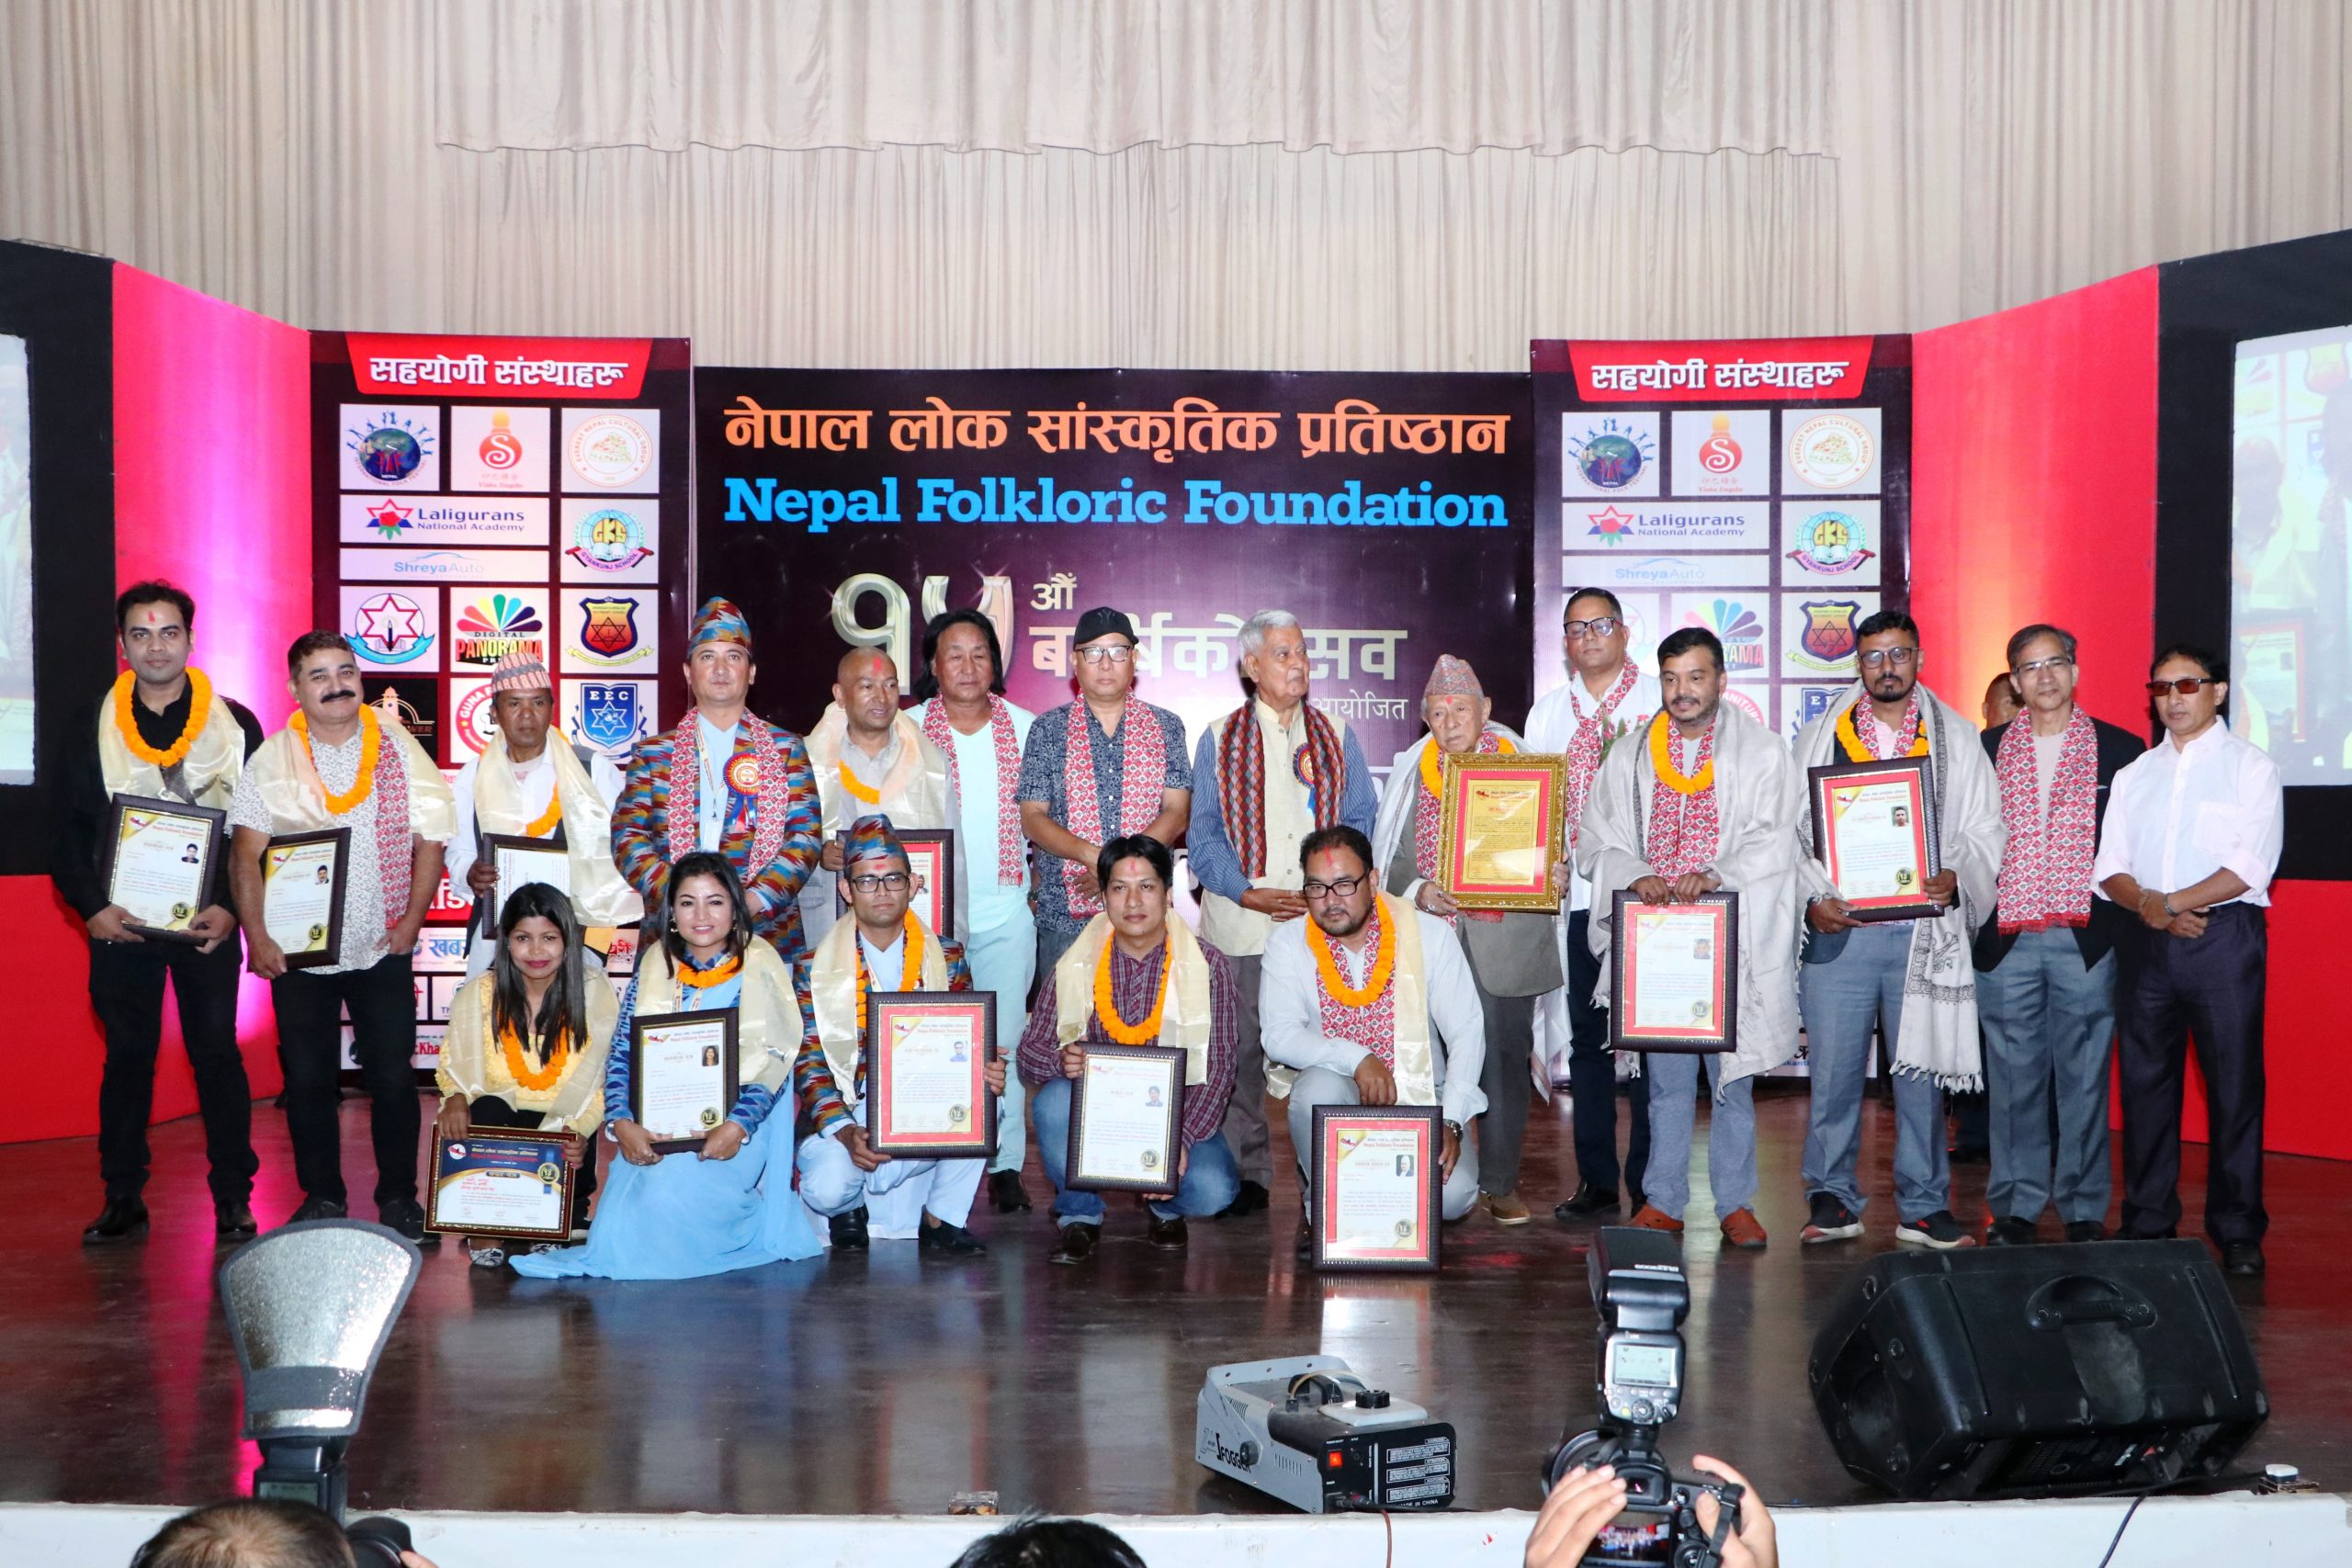 Nepal Folkloric Foundation